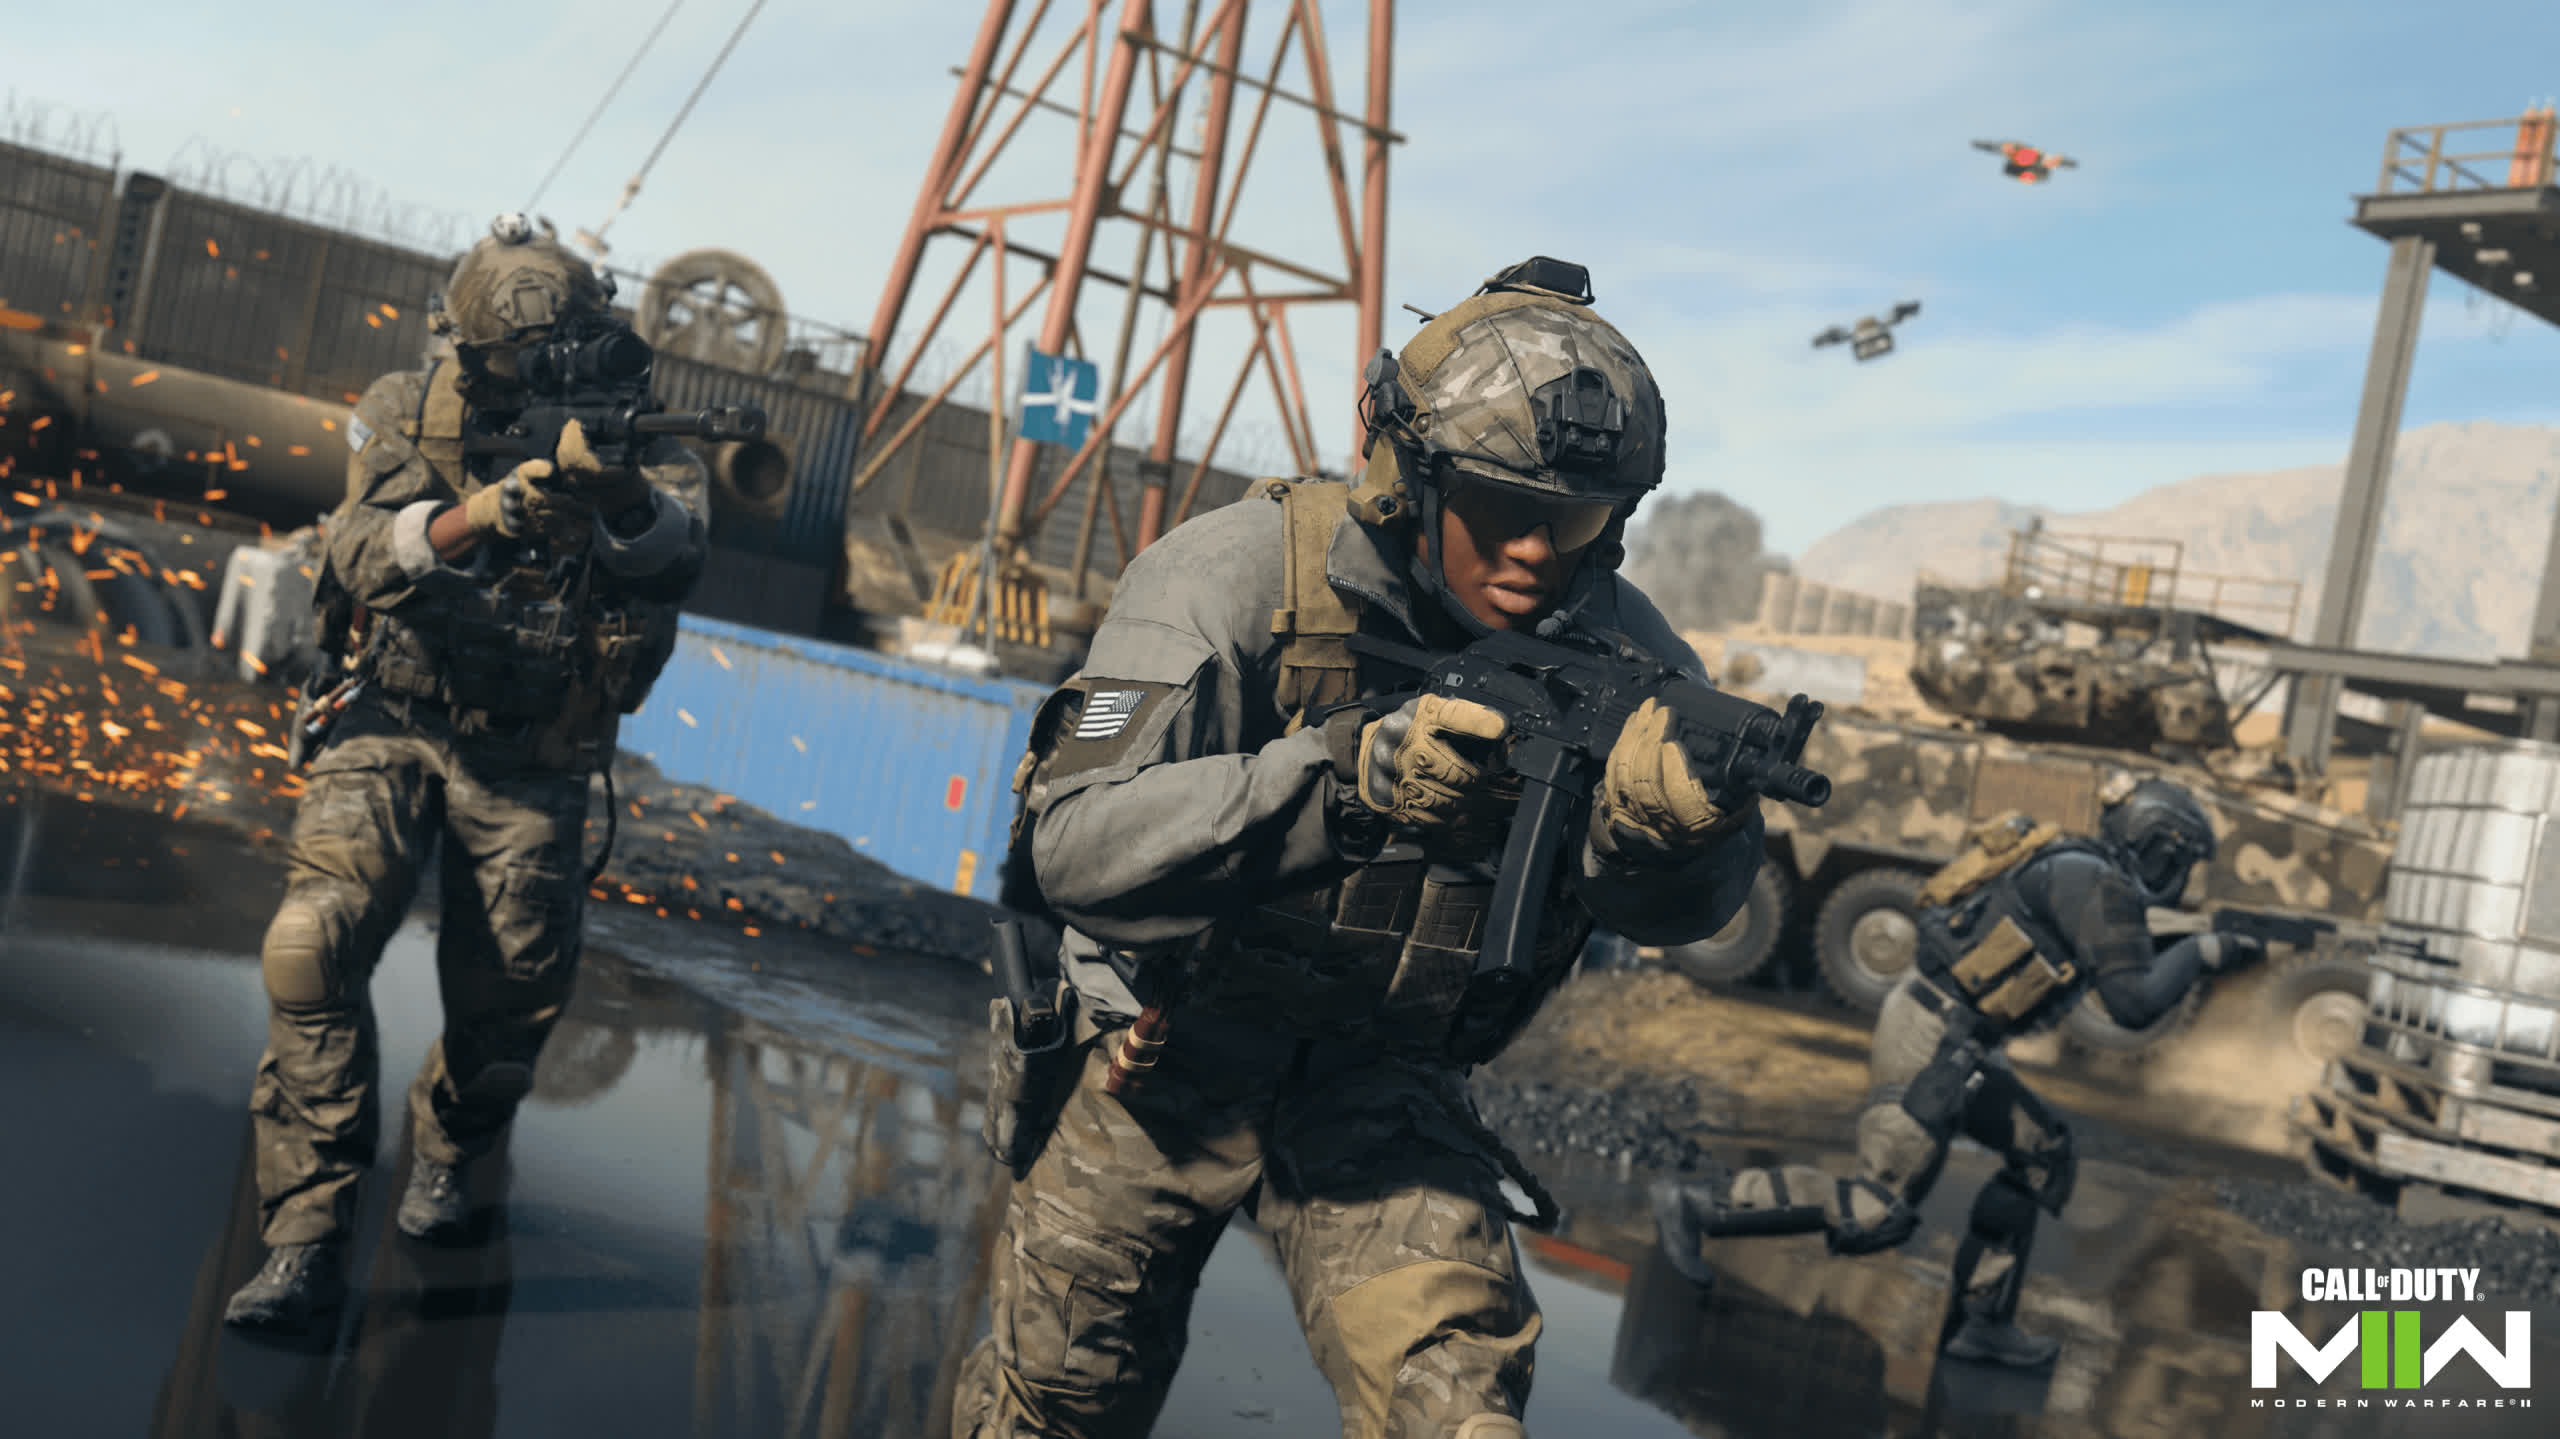 Call of Duty: Modern Warfare II's opening weekend was the best in franchise history